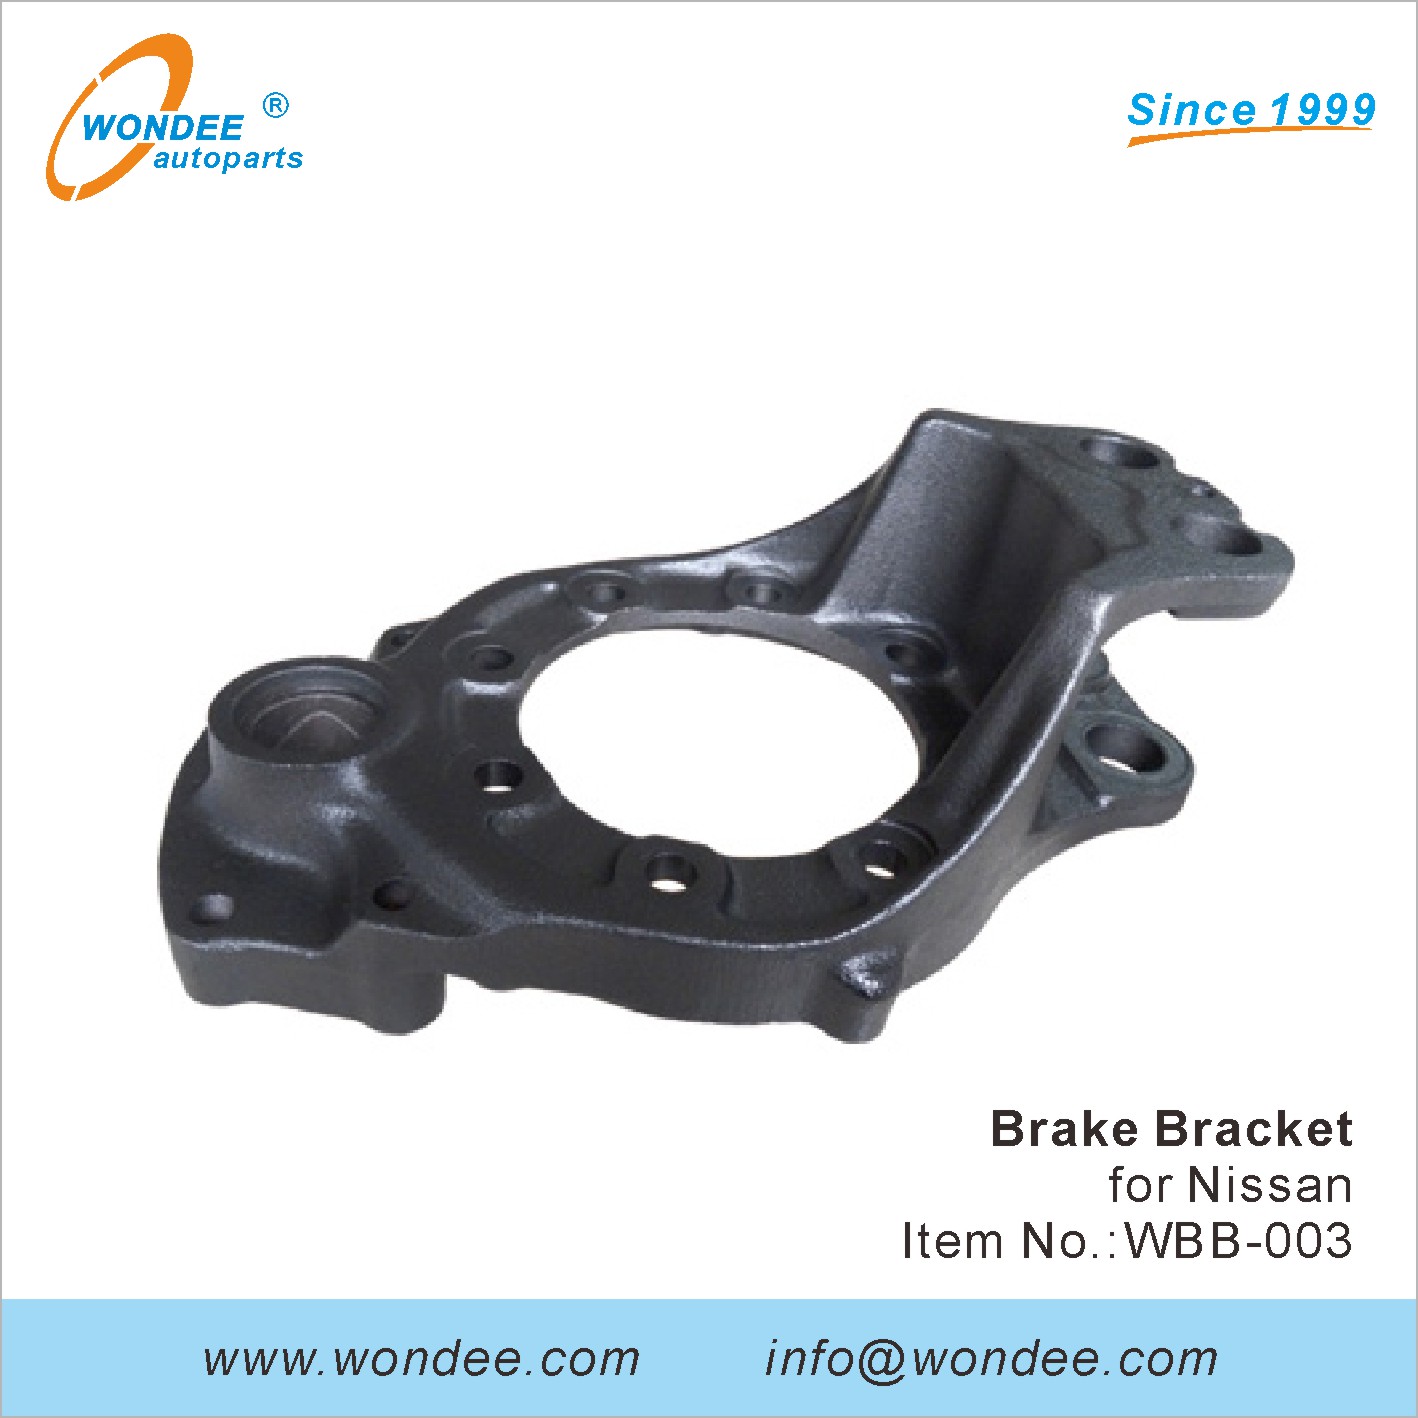 WONDEE brake bracket (3)